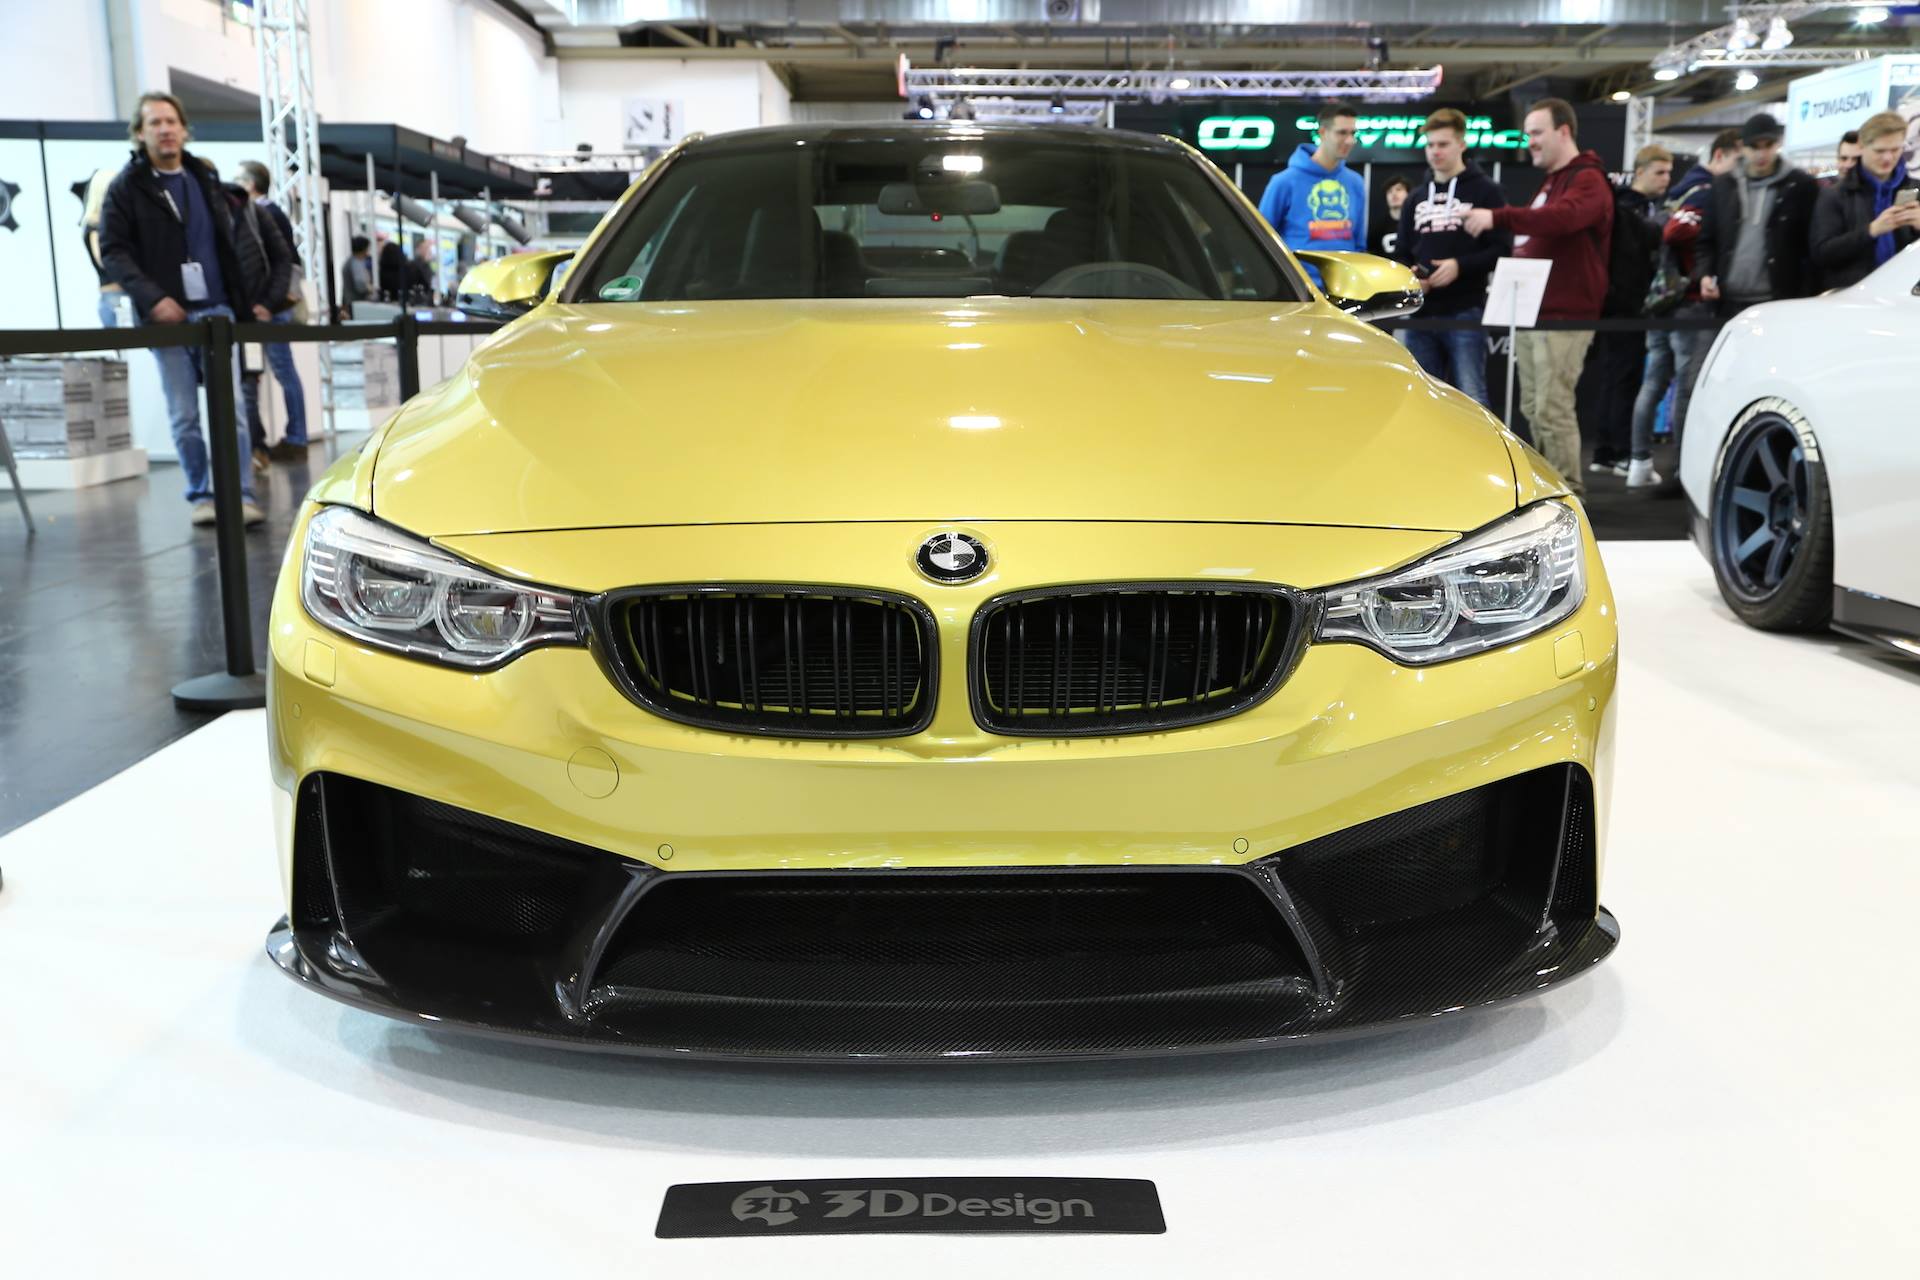 F82 BMW M4 by 3D Design, Presented at 2015 Essen Motor Show